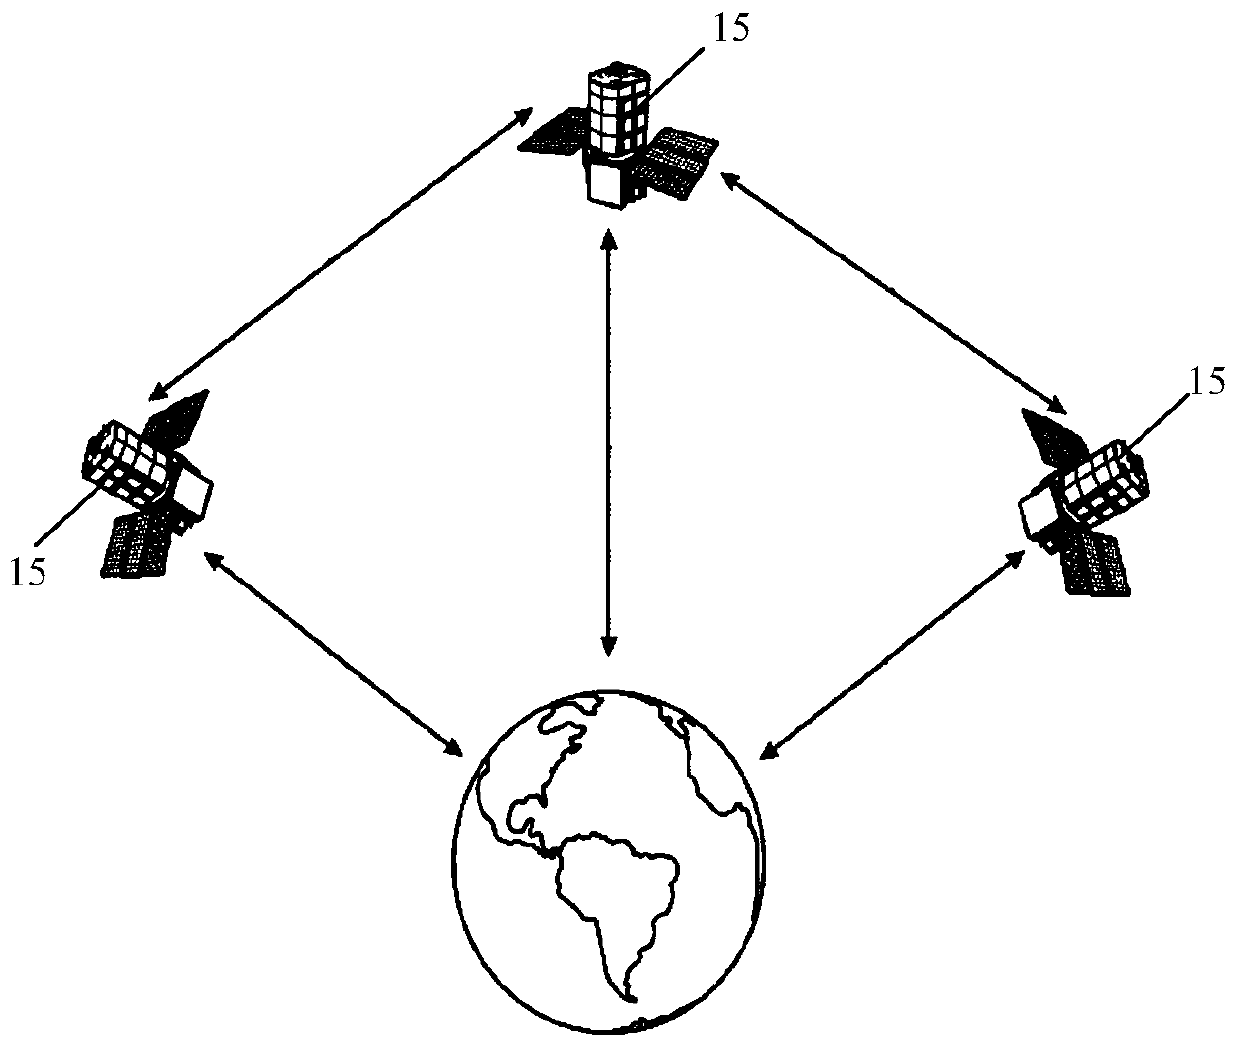 Inter-satellite communication system and method based on formation satellites